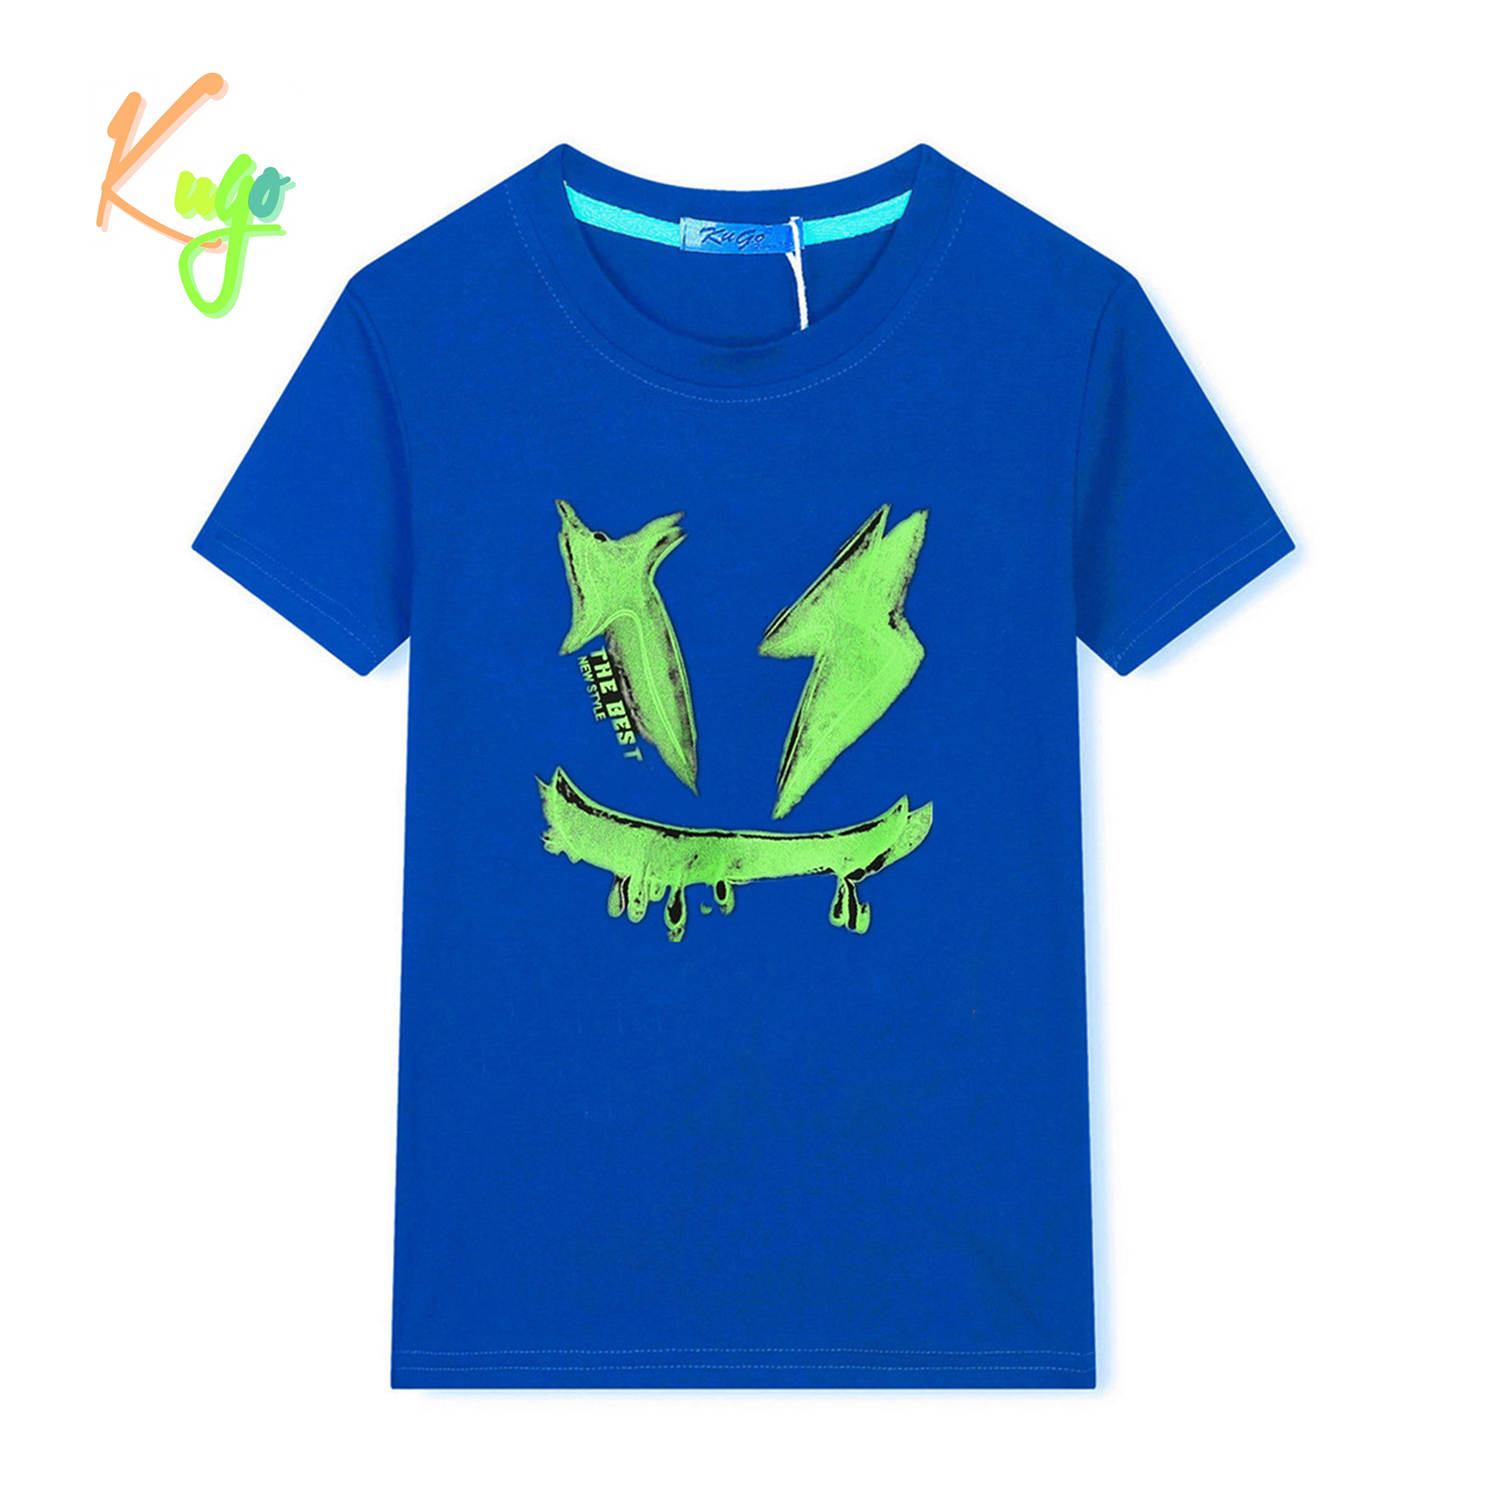 Chlapecké tričko - KUGO HC9292, modrá Barva: Modrá, Velikost: 140